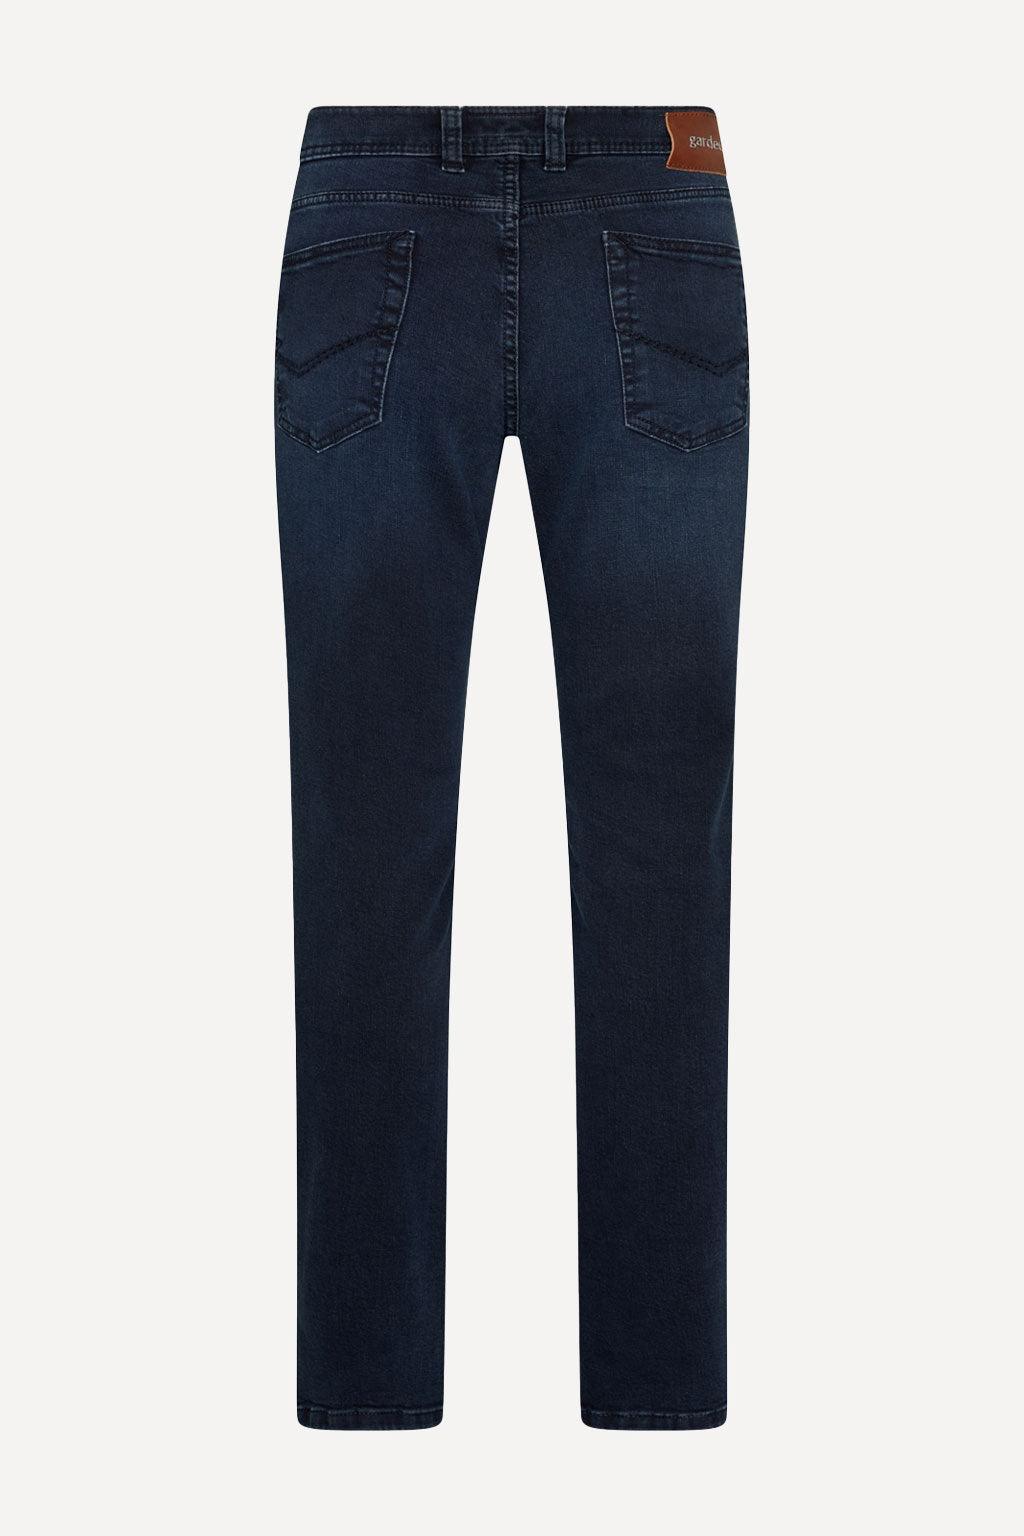 Gardeur jeans | Big Boss | the menswear concept